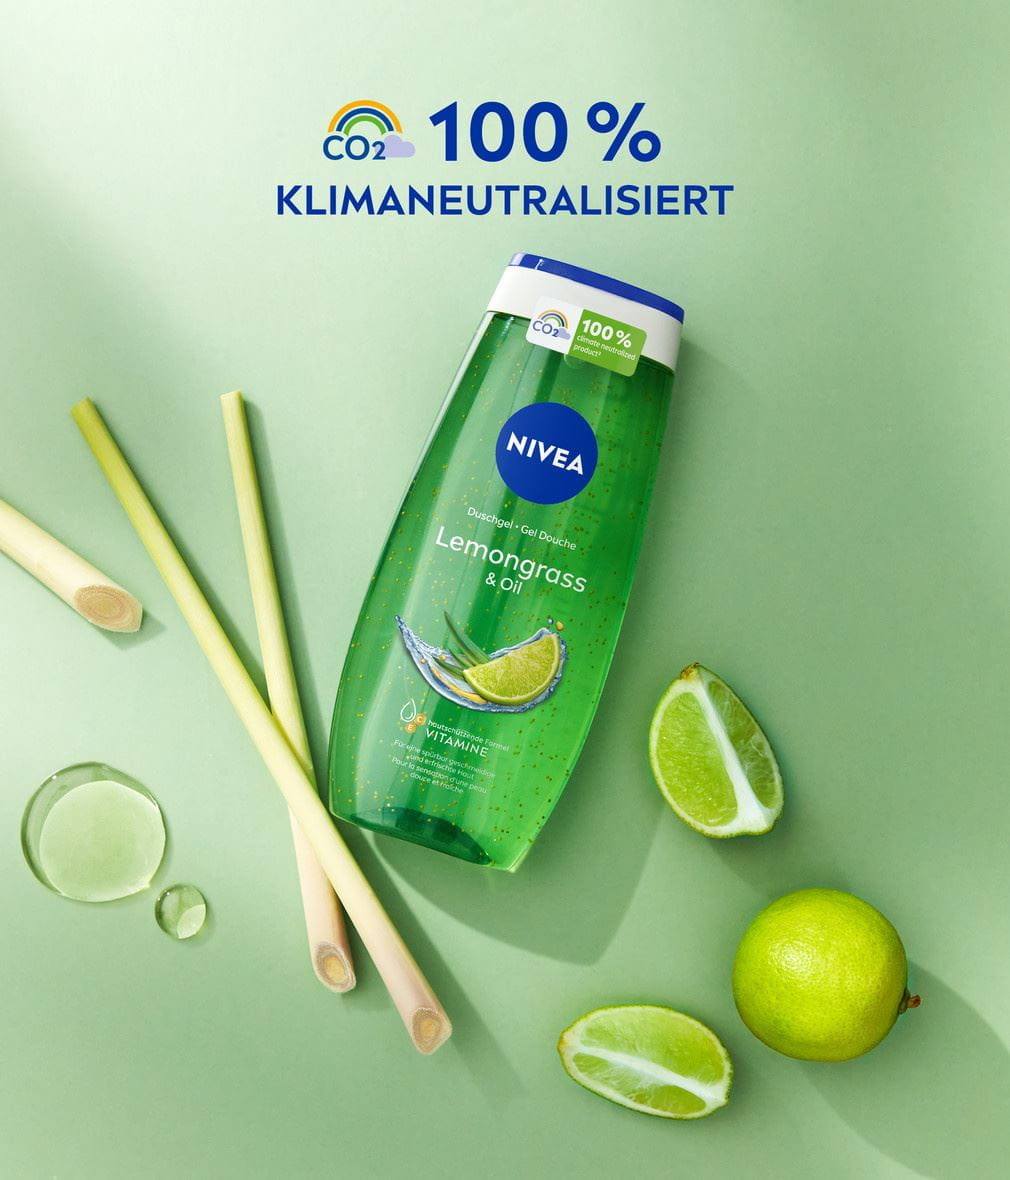 NIVEA Duschgel Lemongrass & Oil mit Vitaminen Mood 100% Klimaneutralisiert